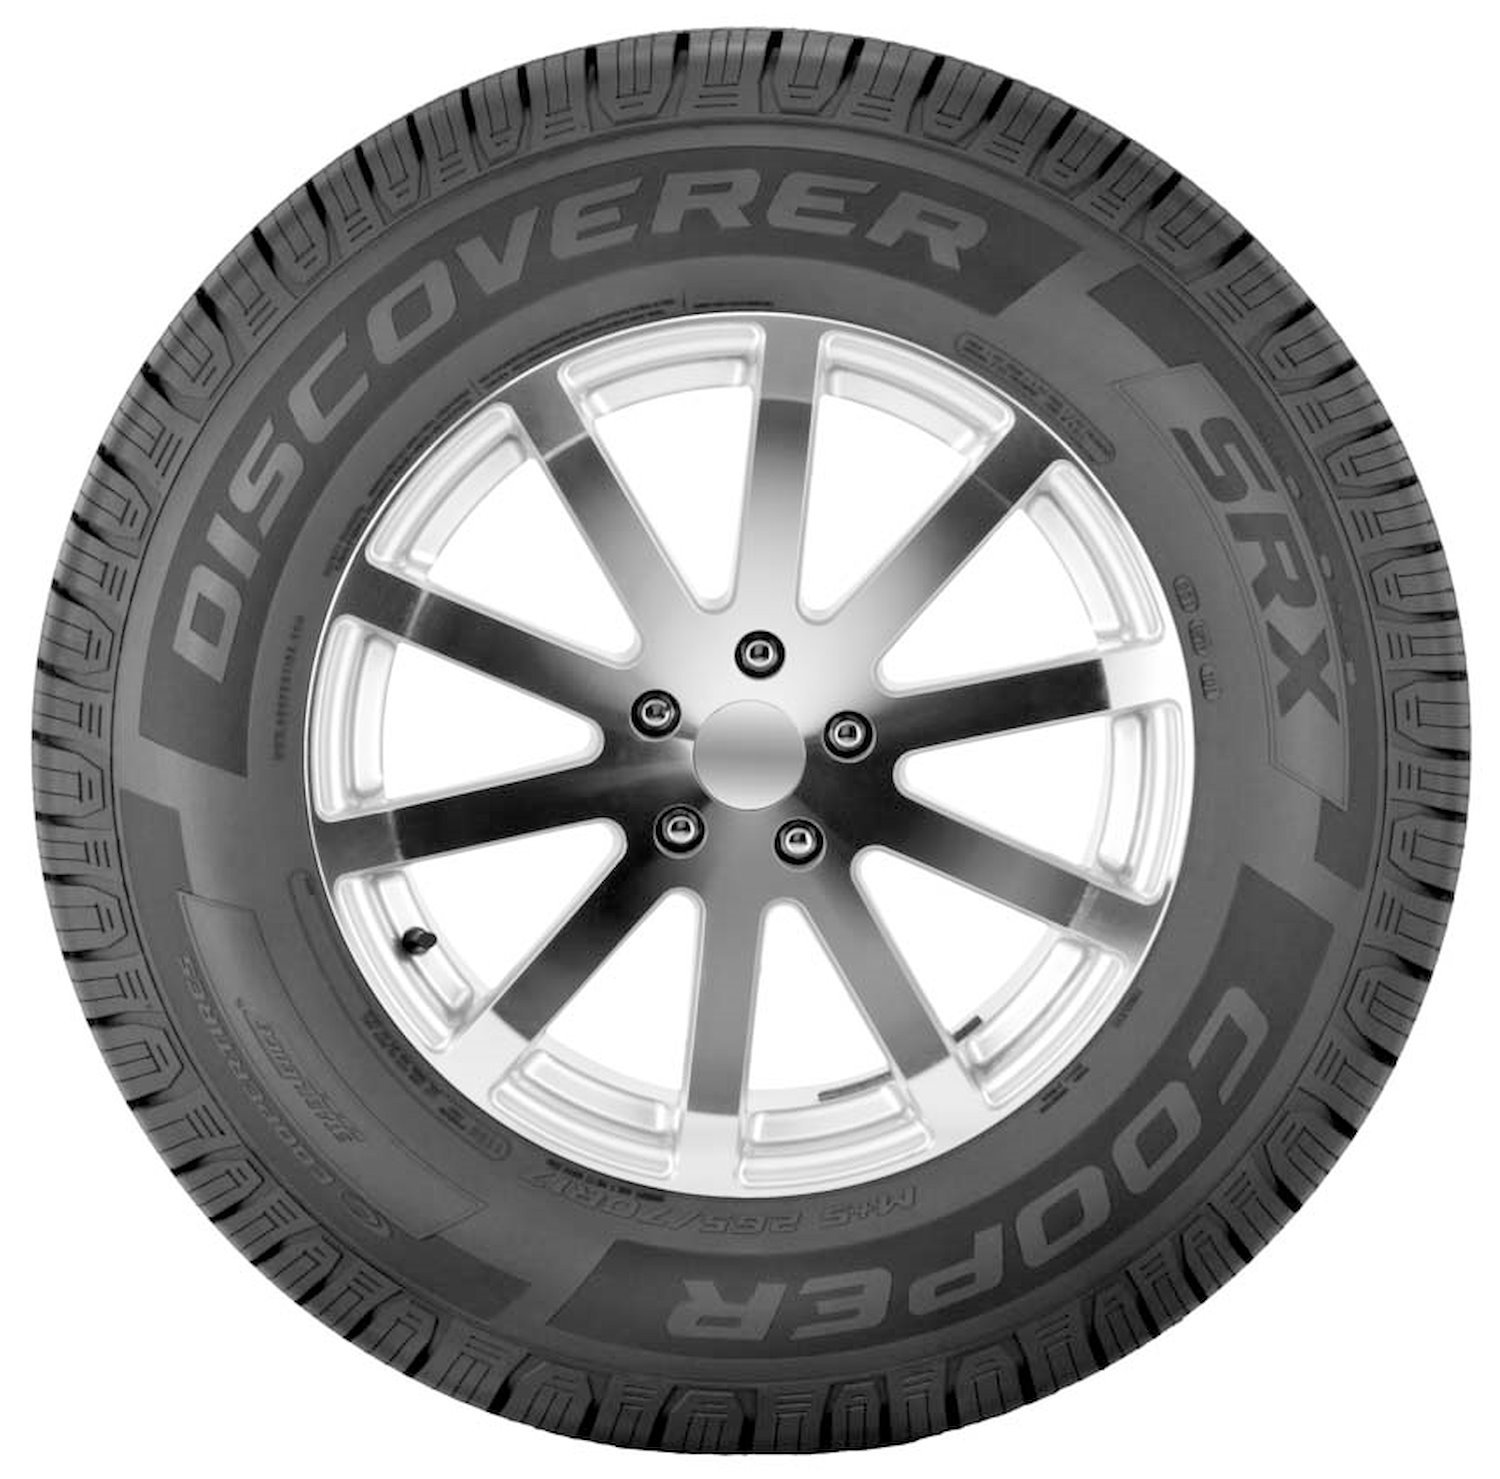 Discoverer SRX Commuter/Touring Tire, 265/70R18